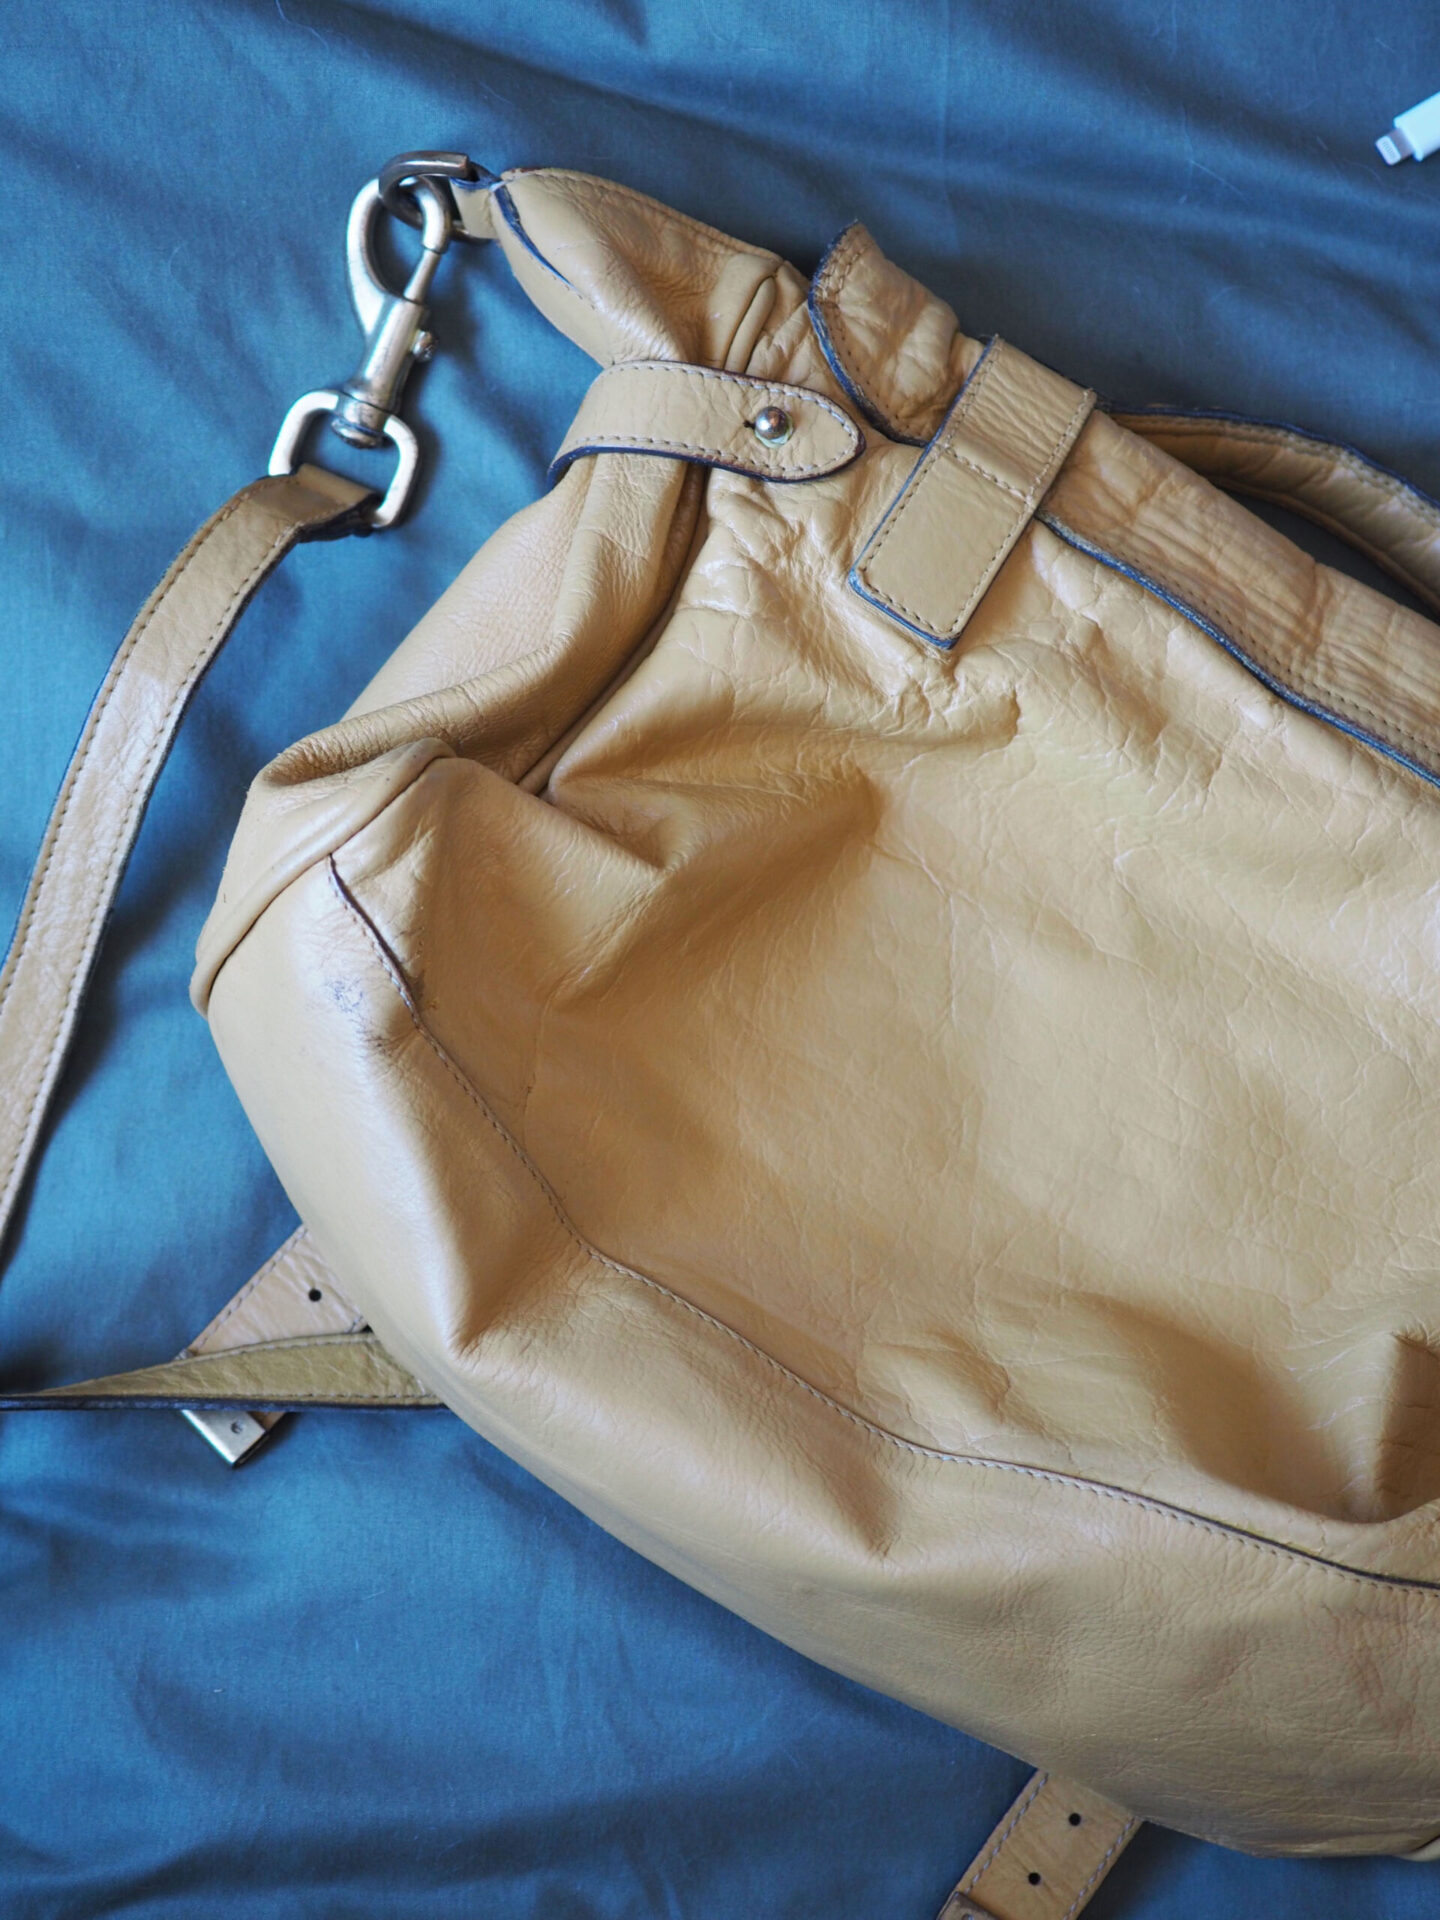 Mulberry Alexa handbag review wear and tear